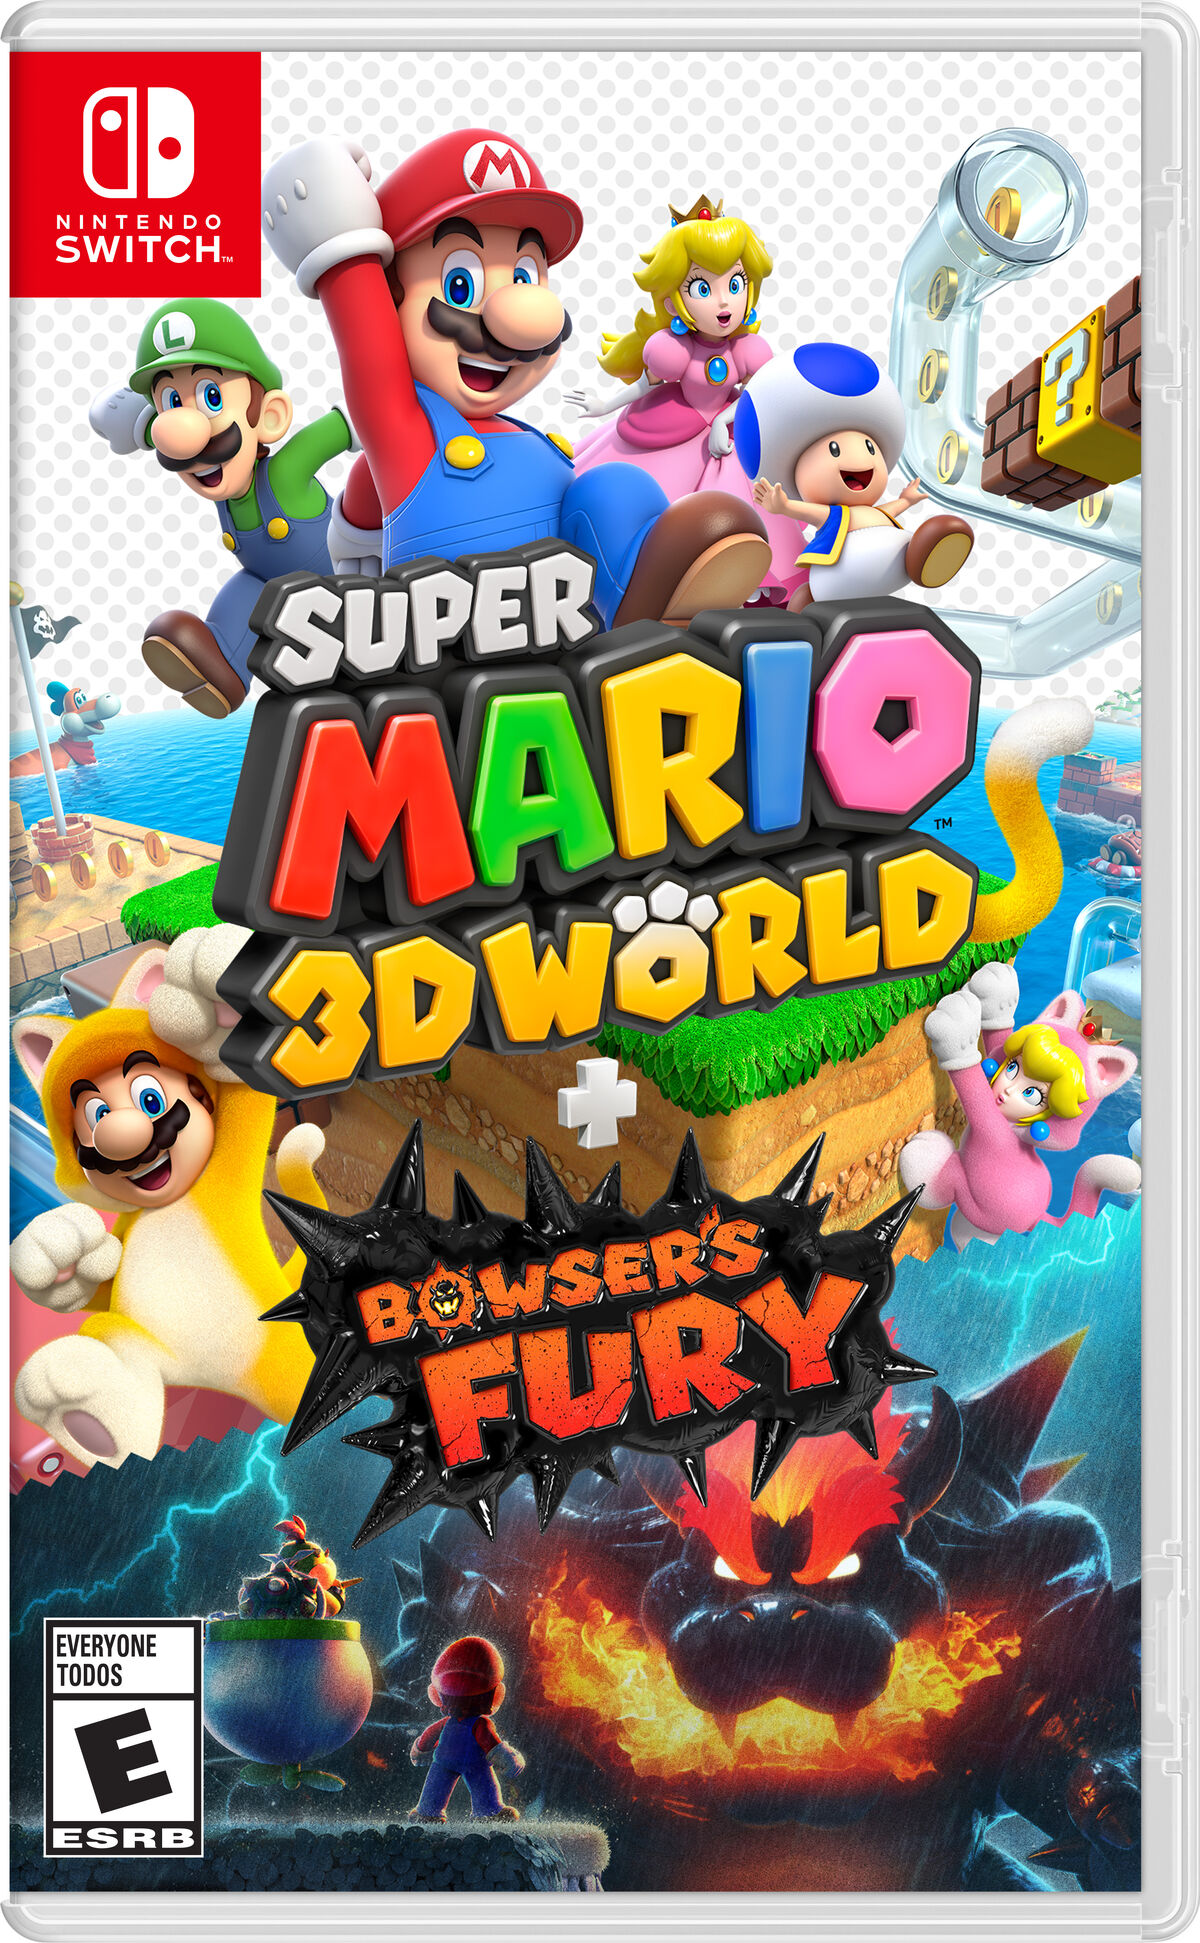 World Star (Super Mario Run), MarioWiki